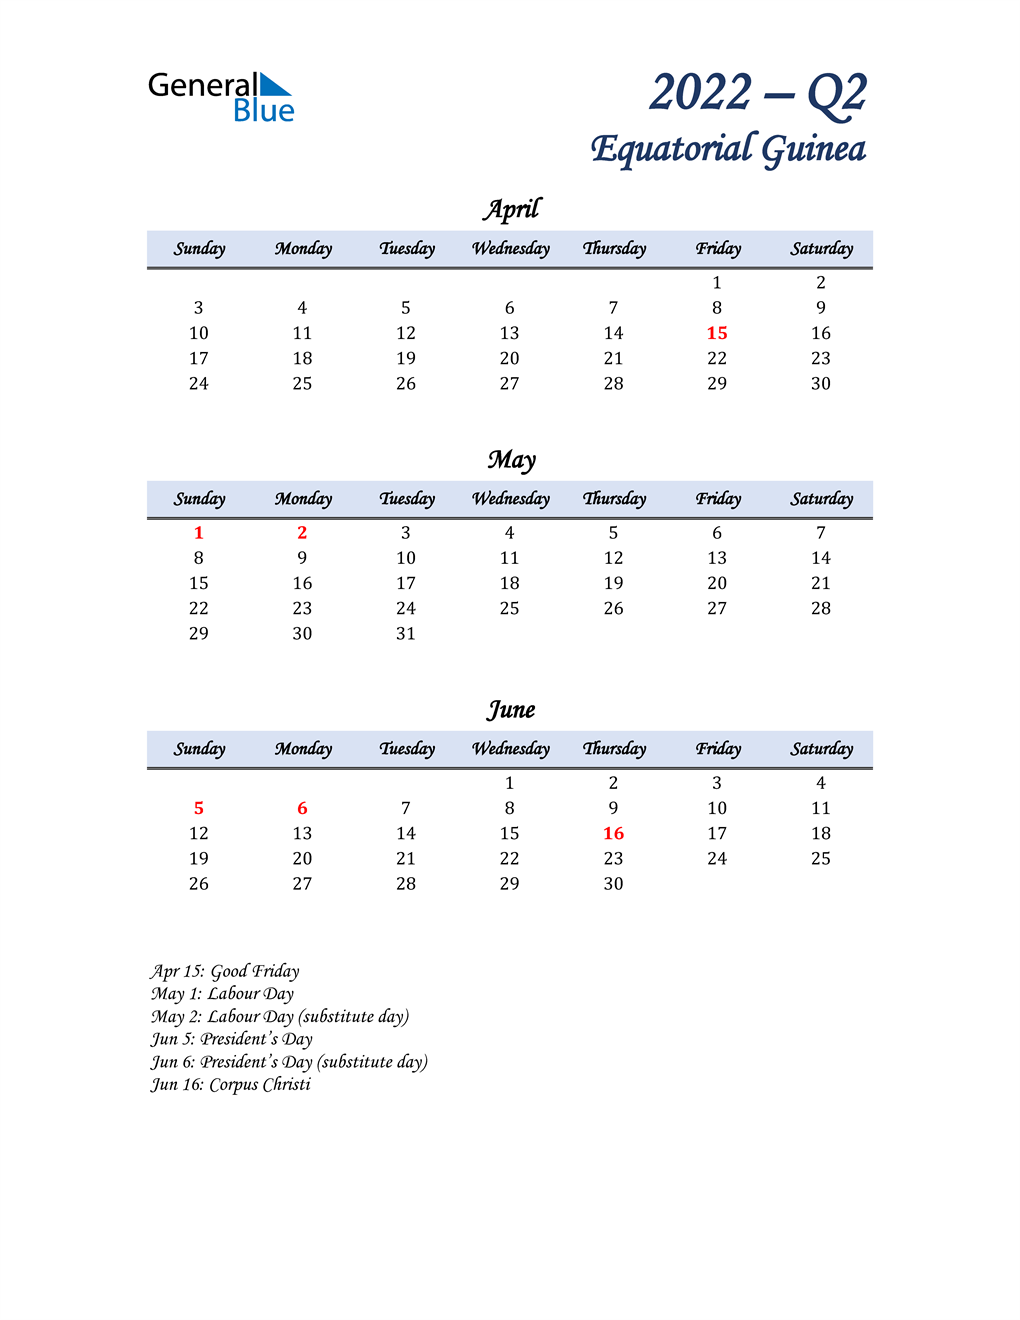  April, May, and June Calendar for Equatorial Guinea